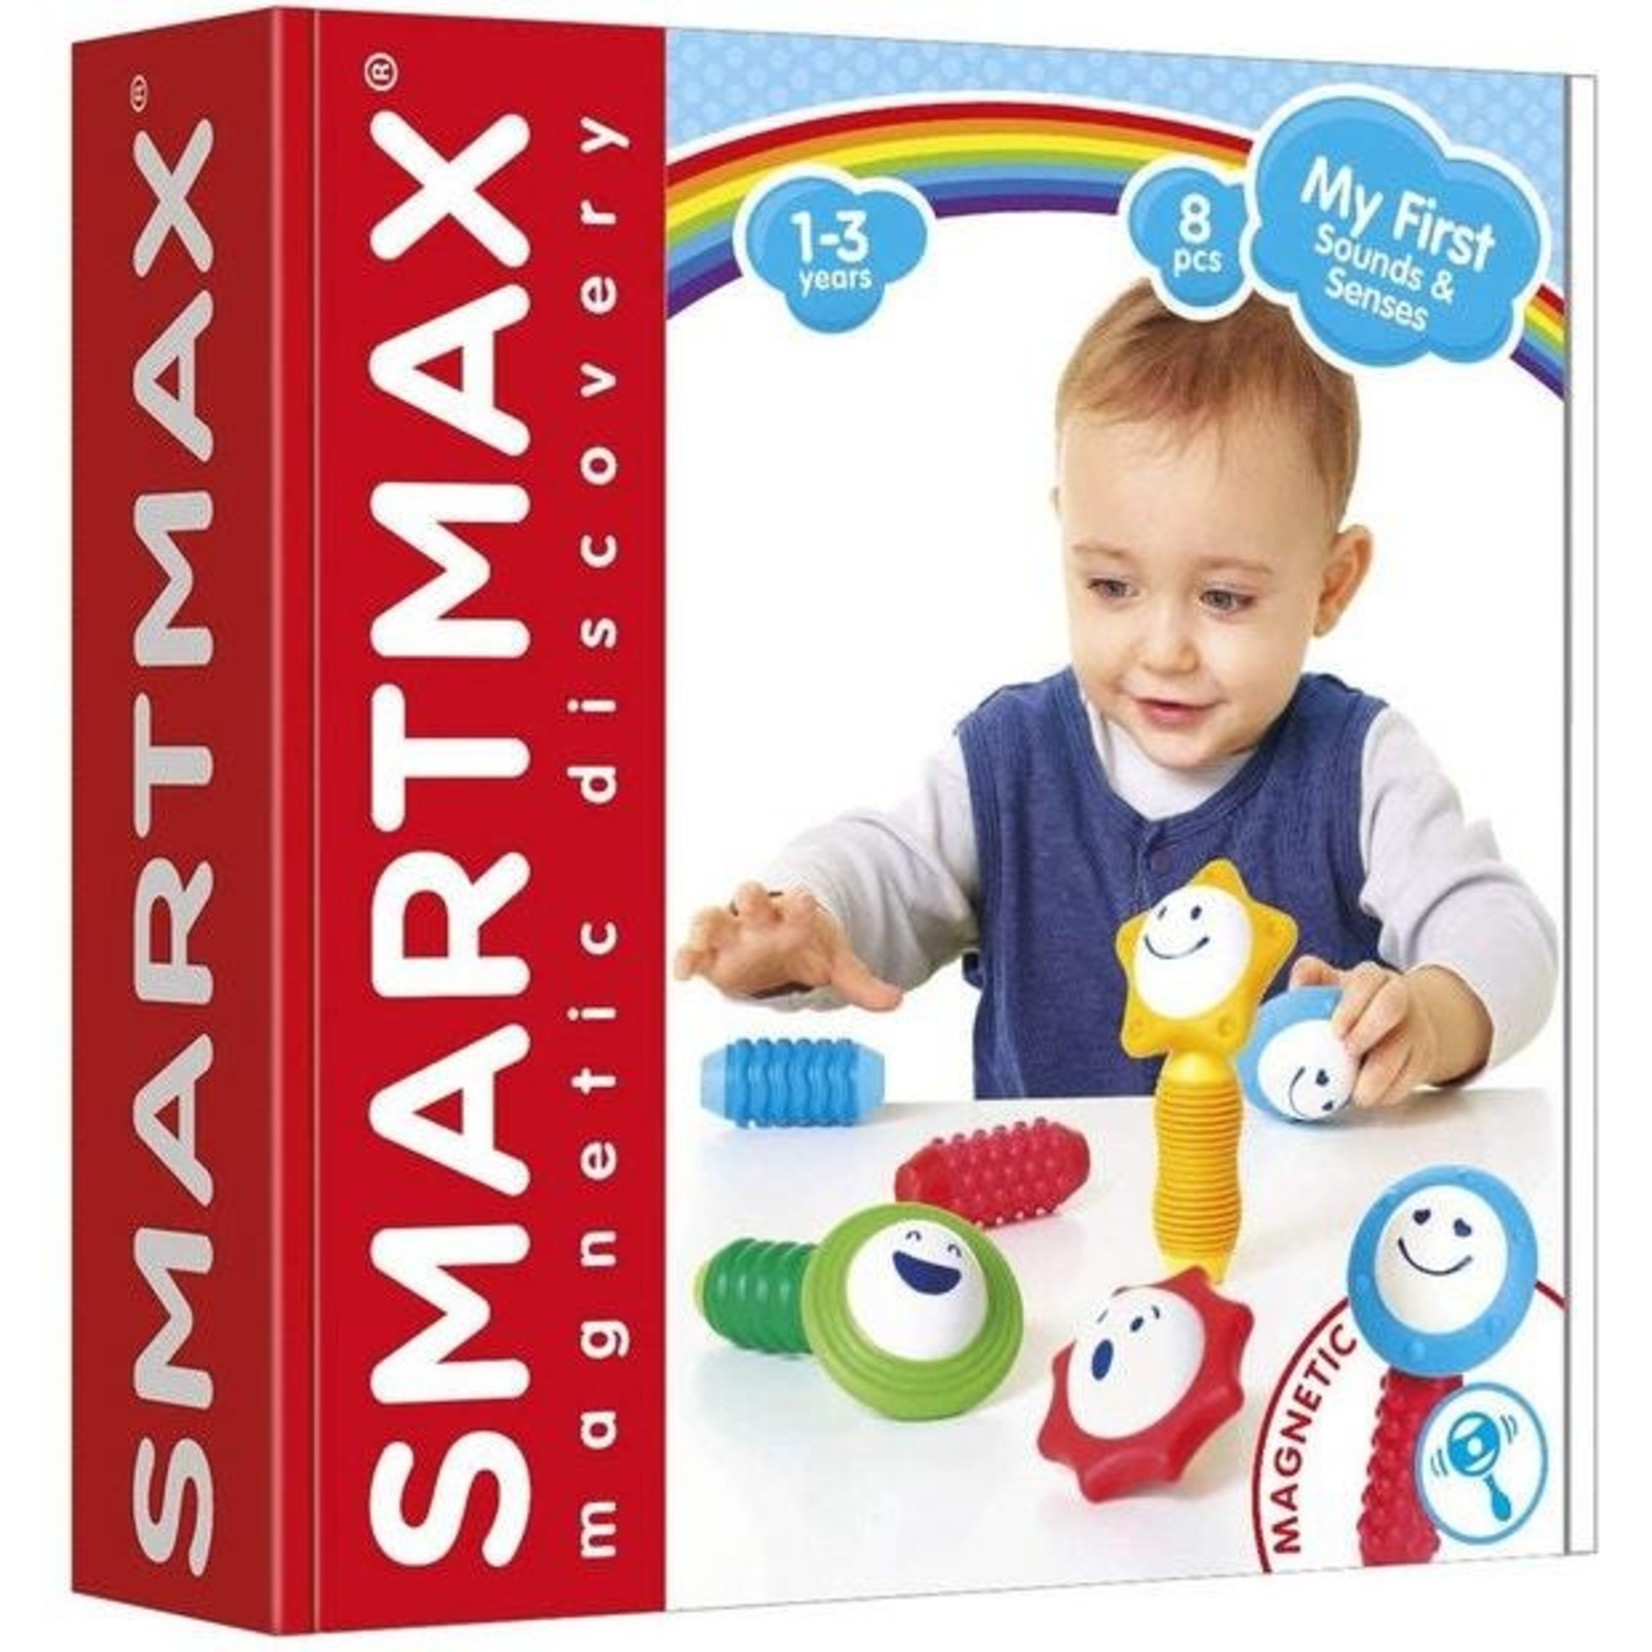 Smartmax My First : Sons et sens